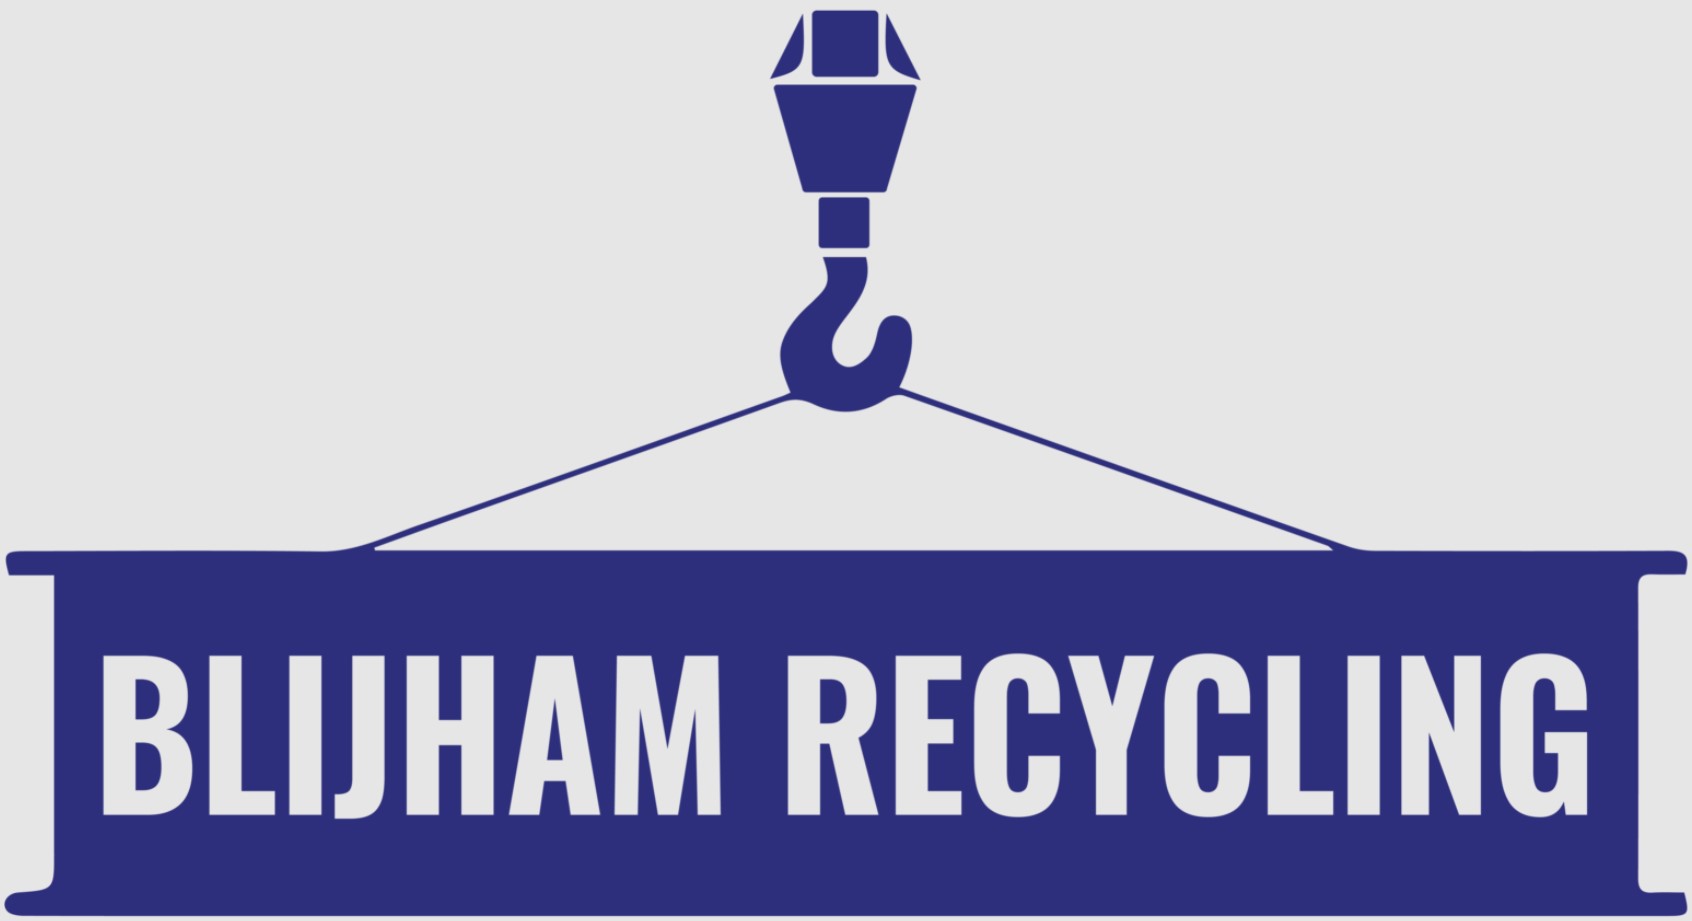 Blijham Recycling